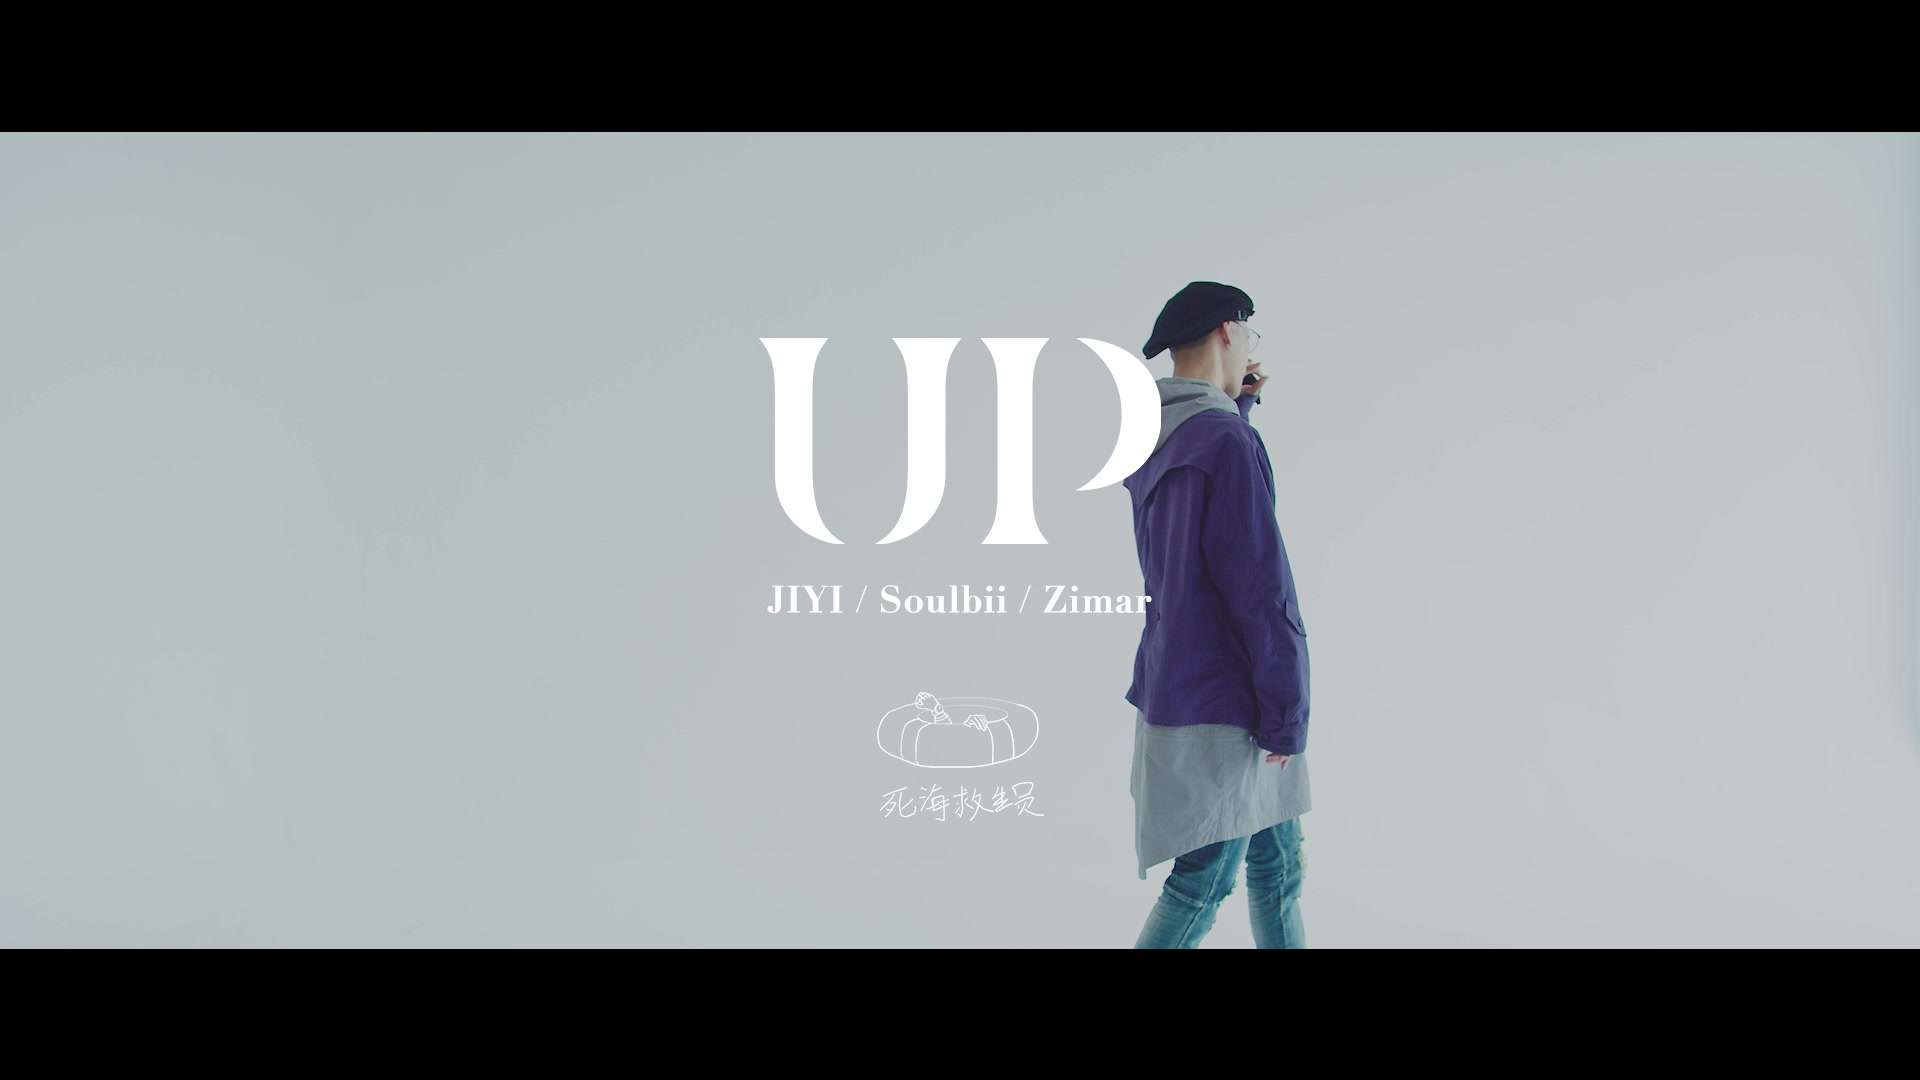 死海救生员 - UP (Official Music Video)